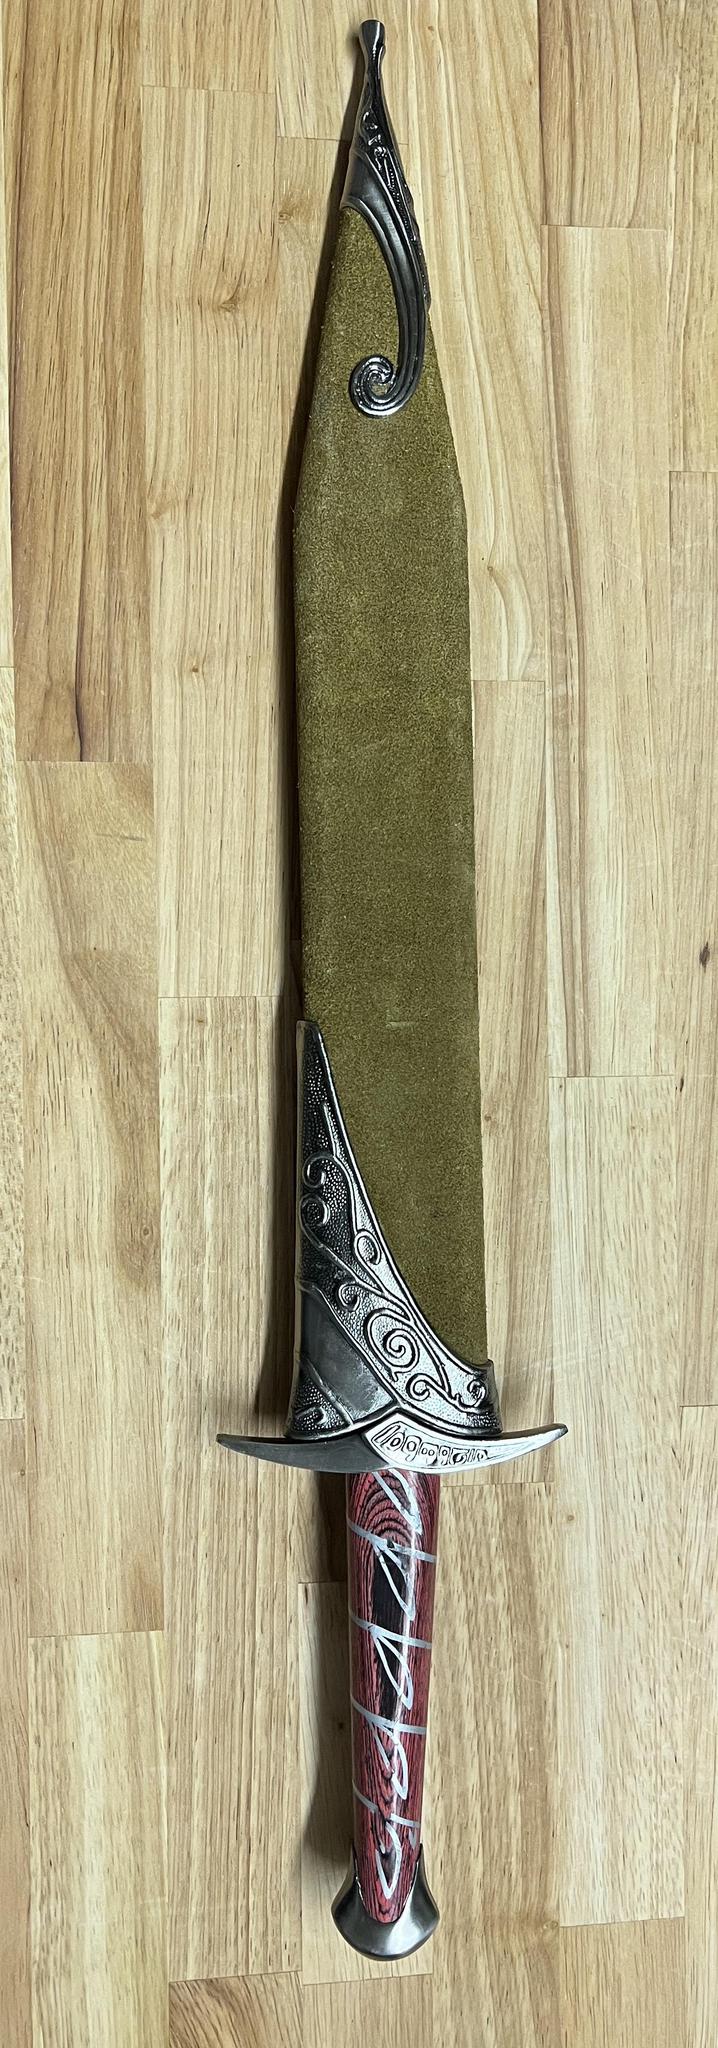 The sword of Frodo Baggins LOTR